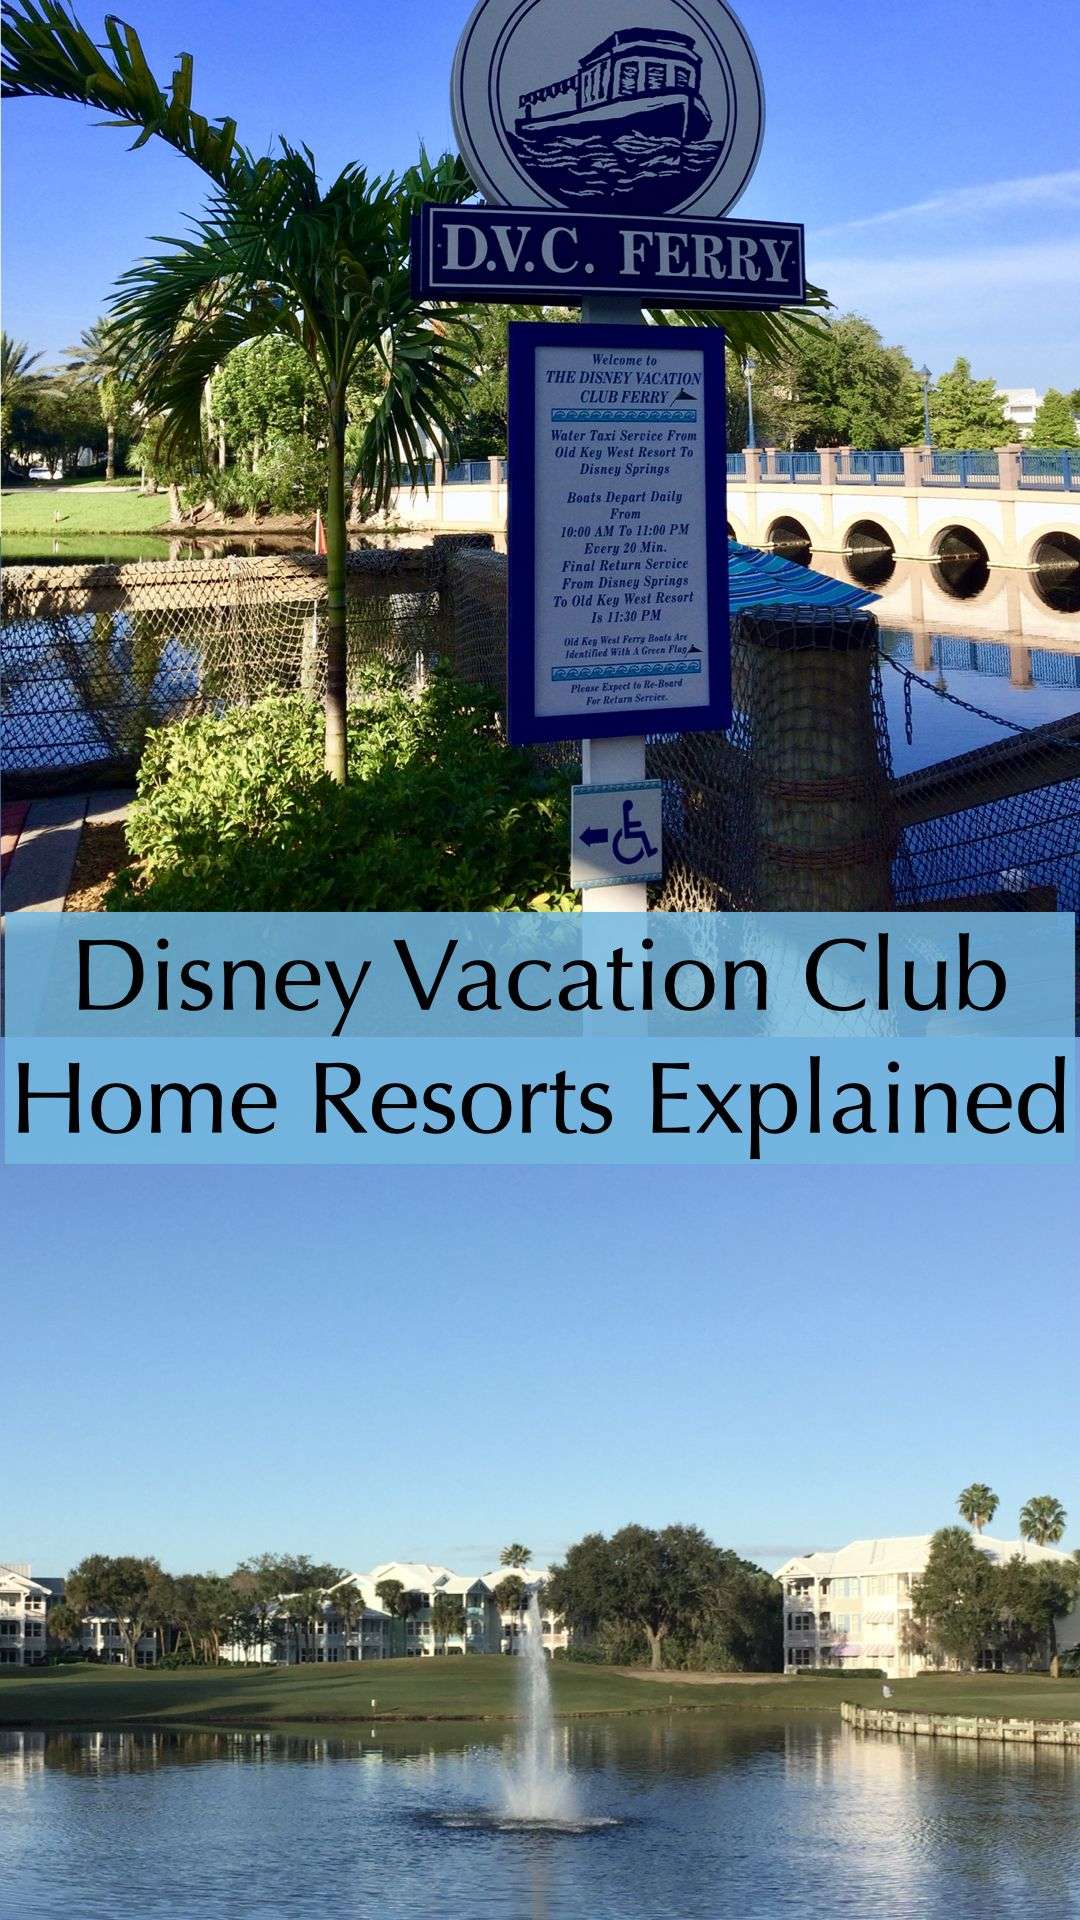 Disney Vacation Club: Home Resort